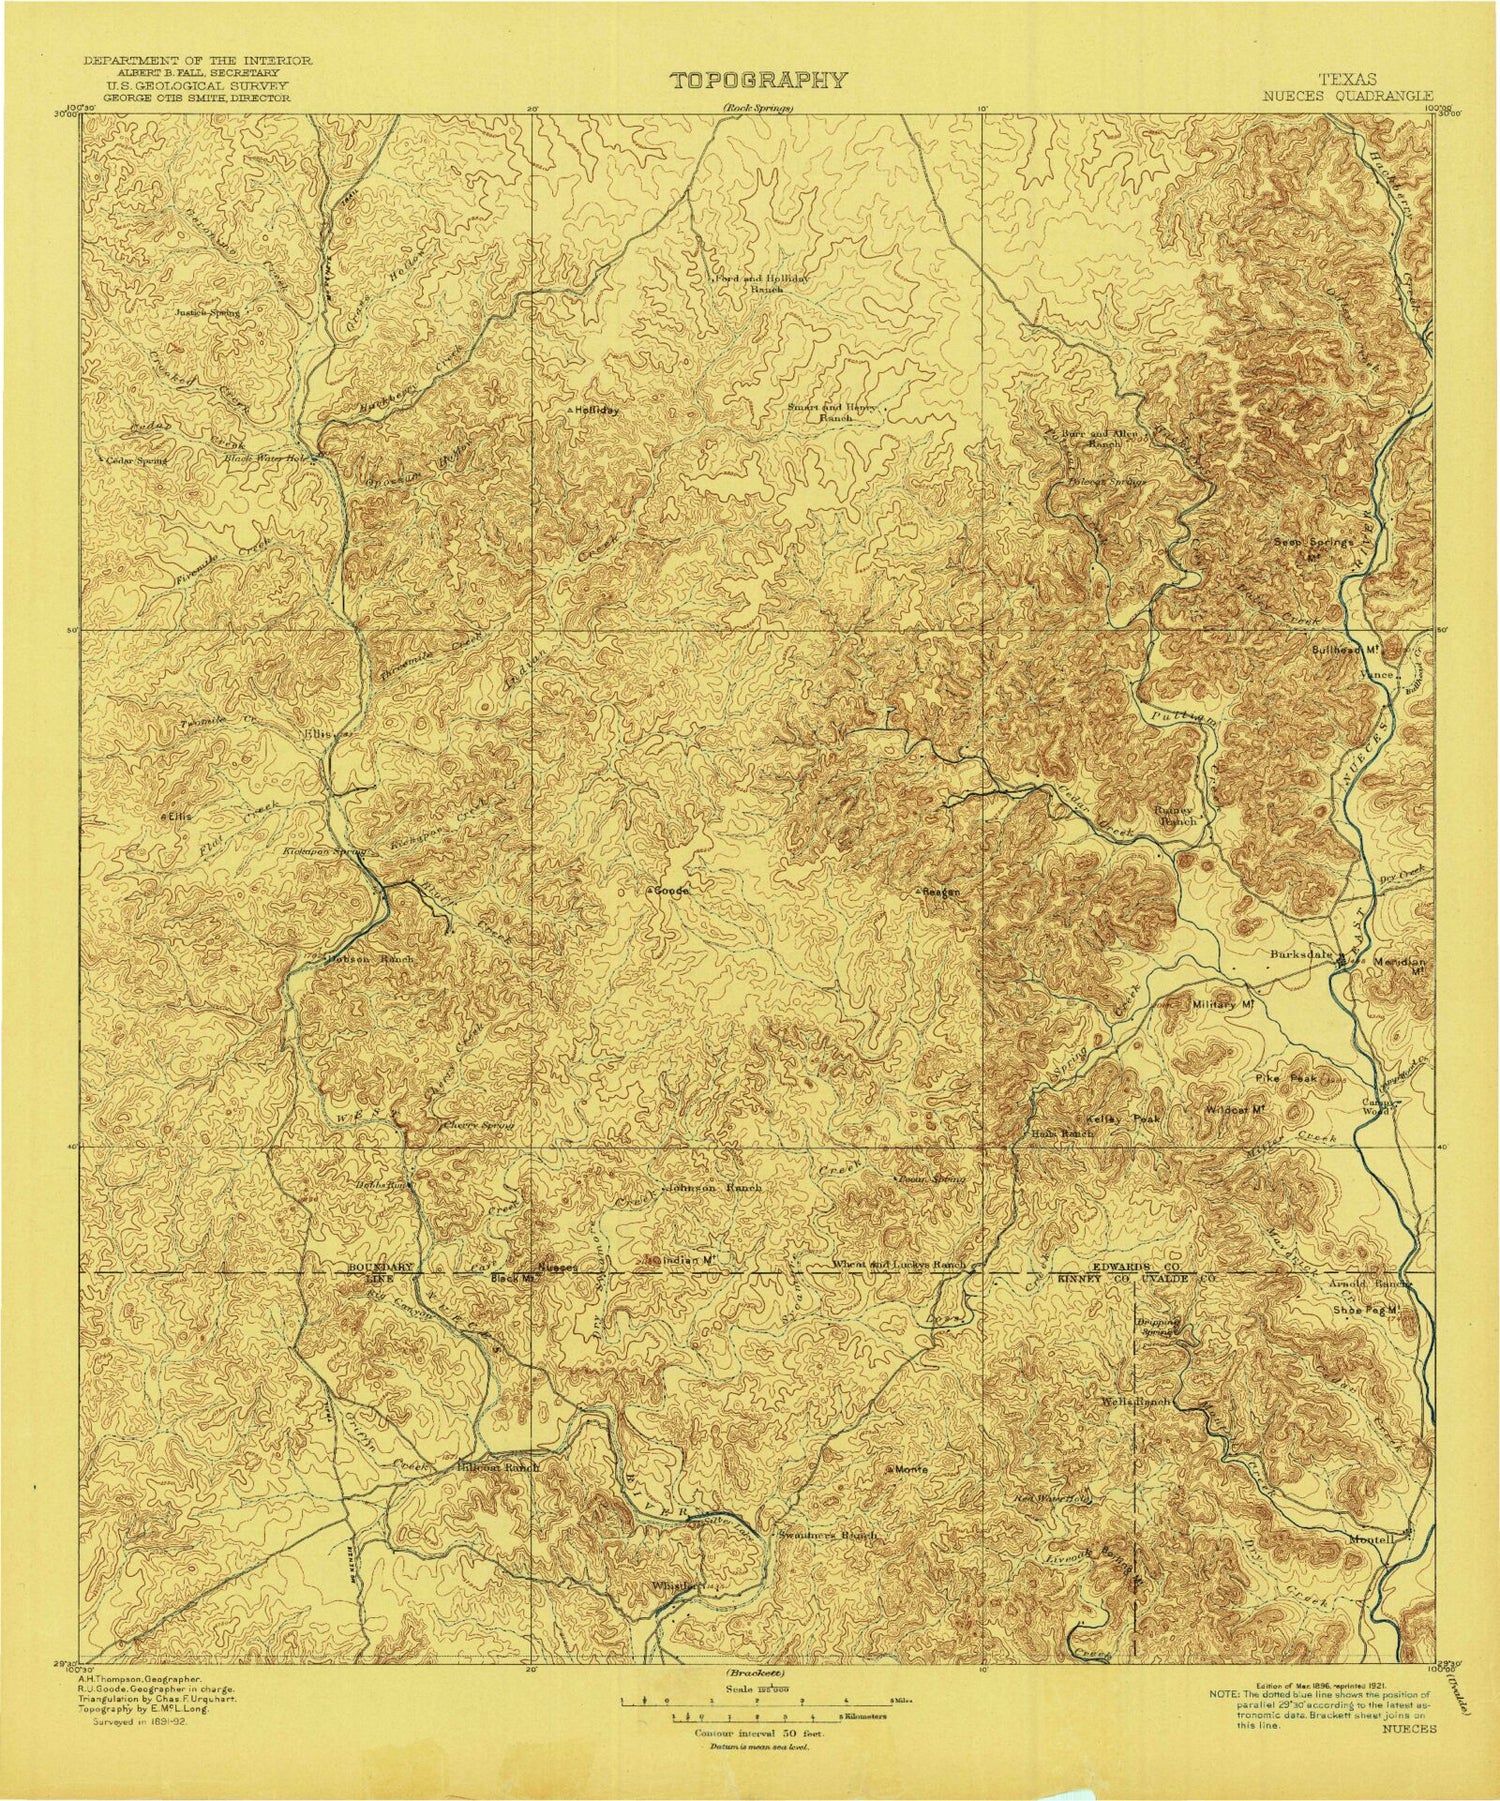 Historic 1896 Nueces Texas 30'x30' Topo Map Image